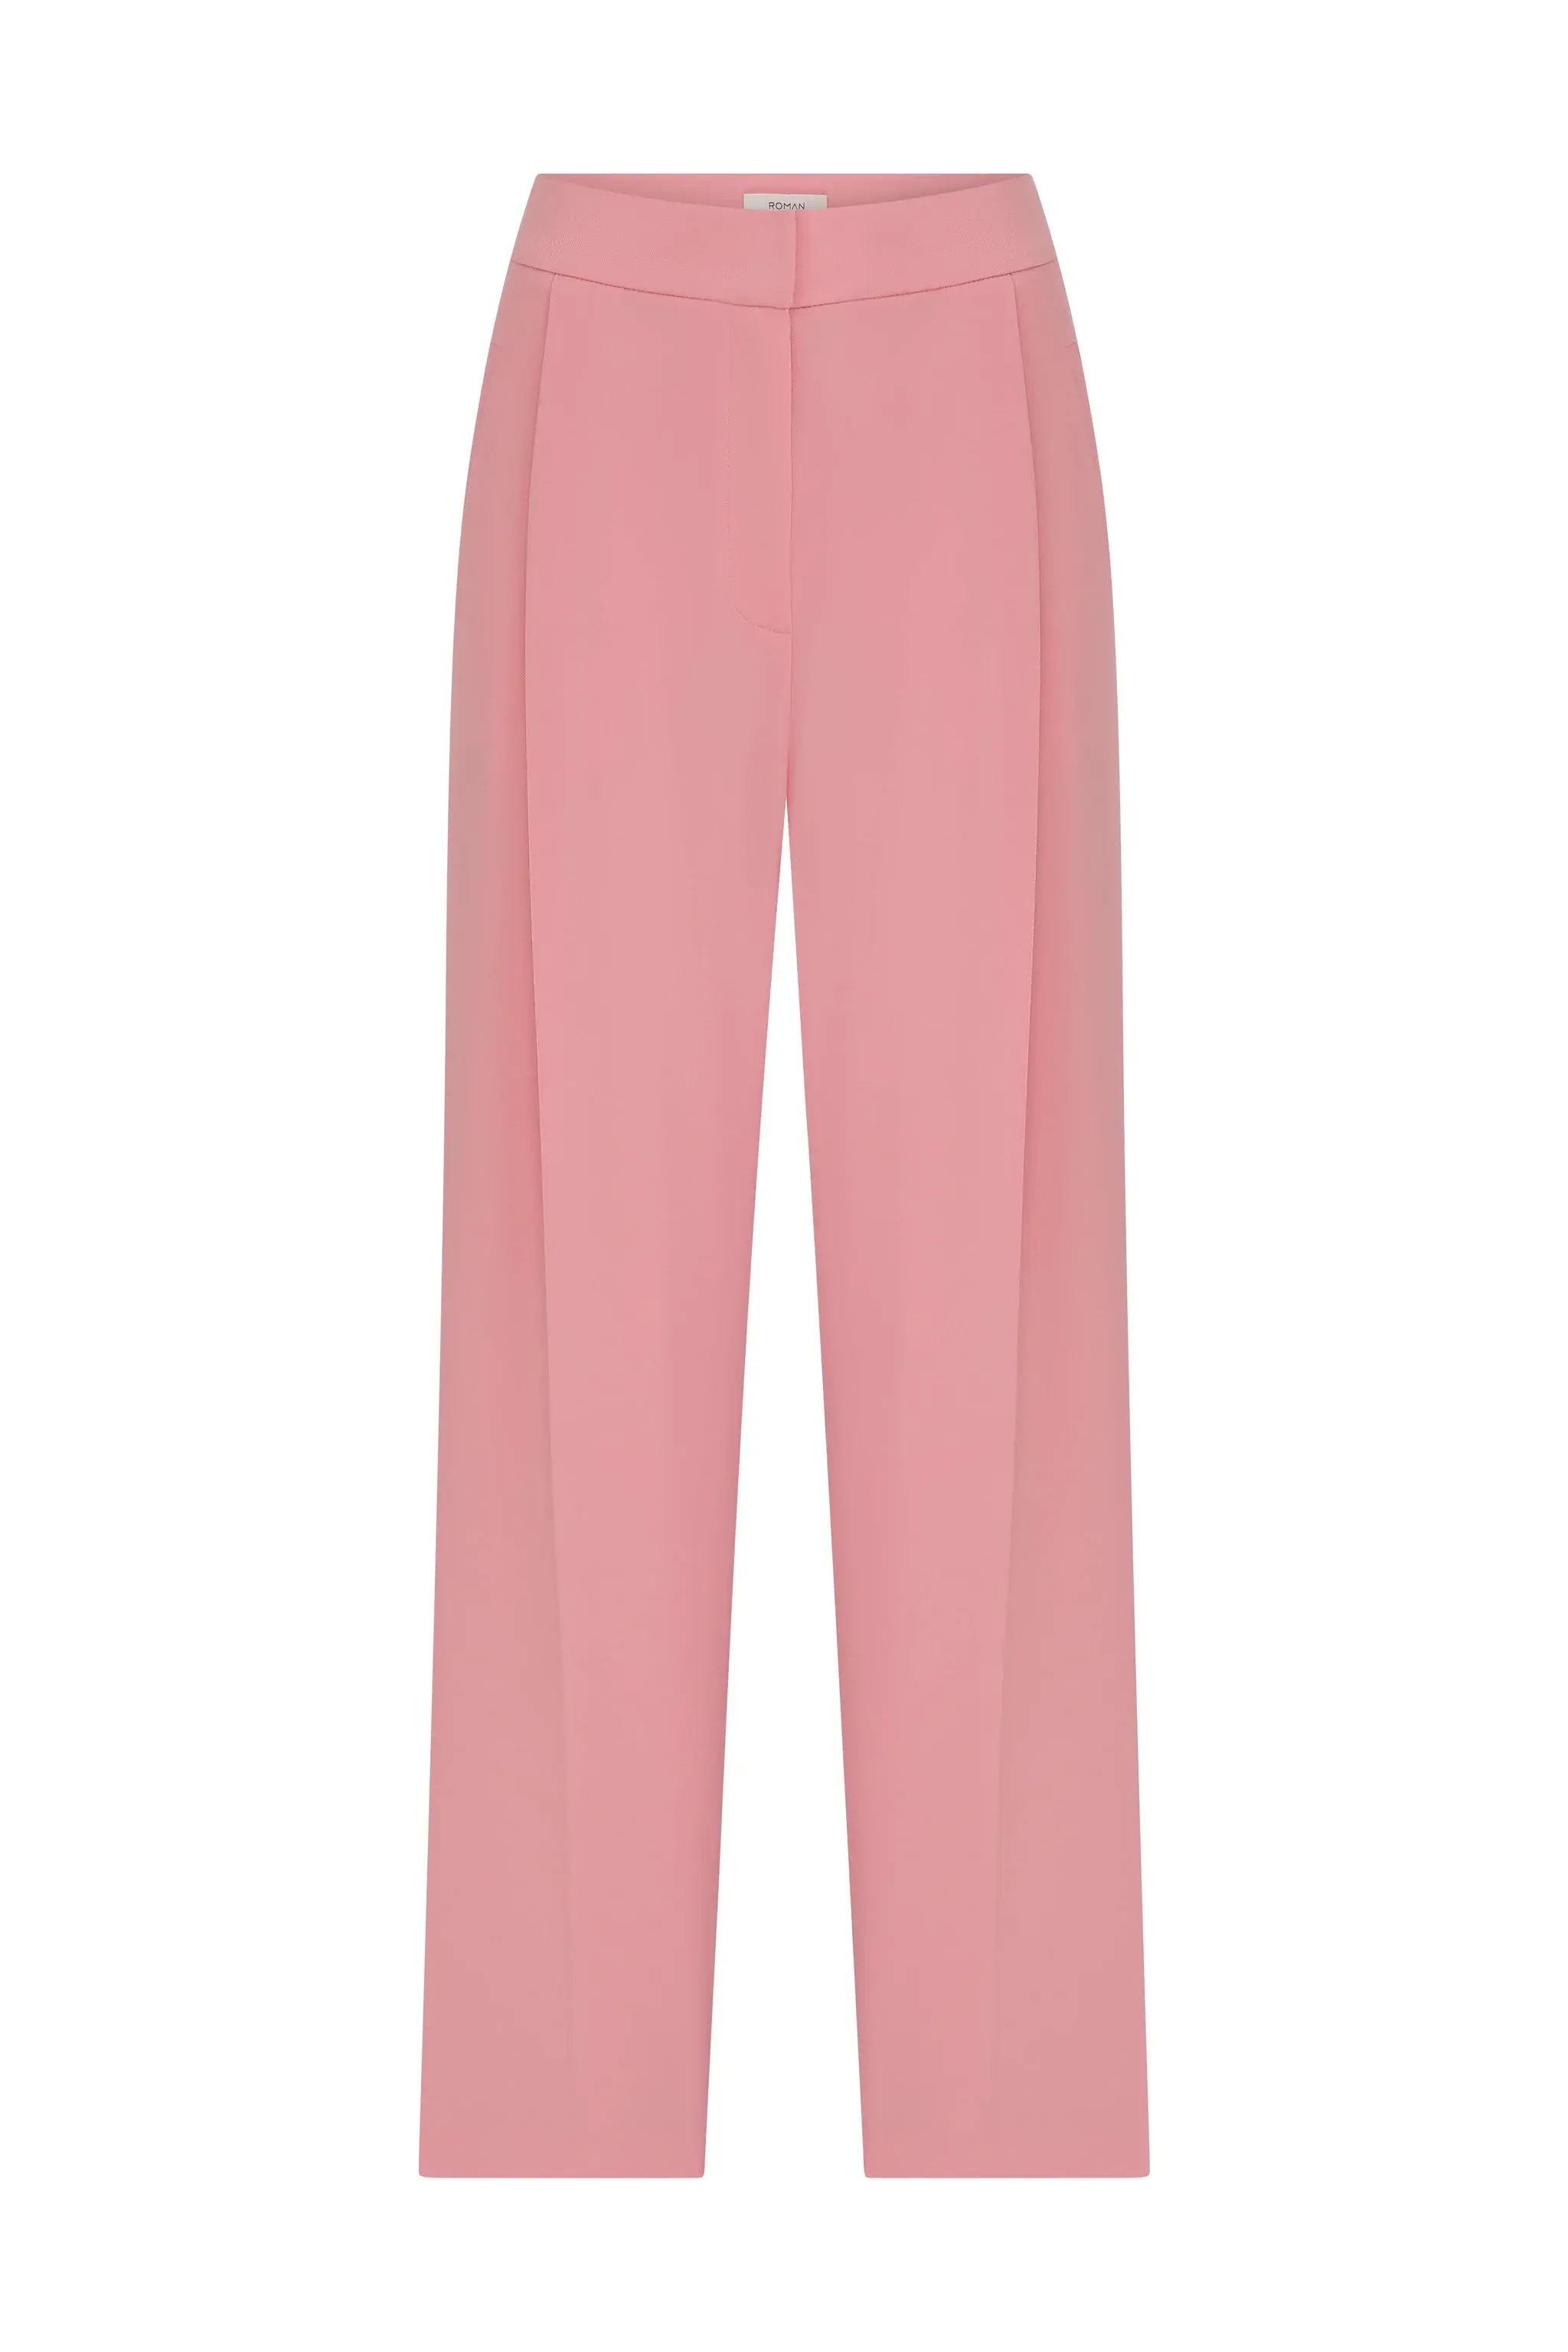 Roman Silk Crepe Carrot Women's Pants - 4 / Pink. 1